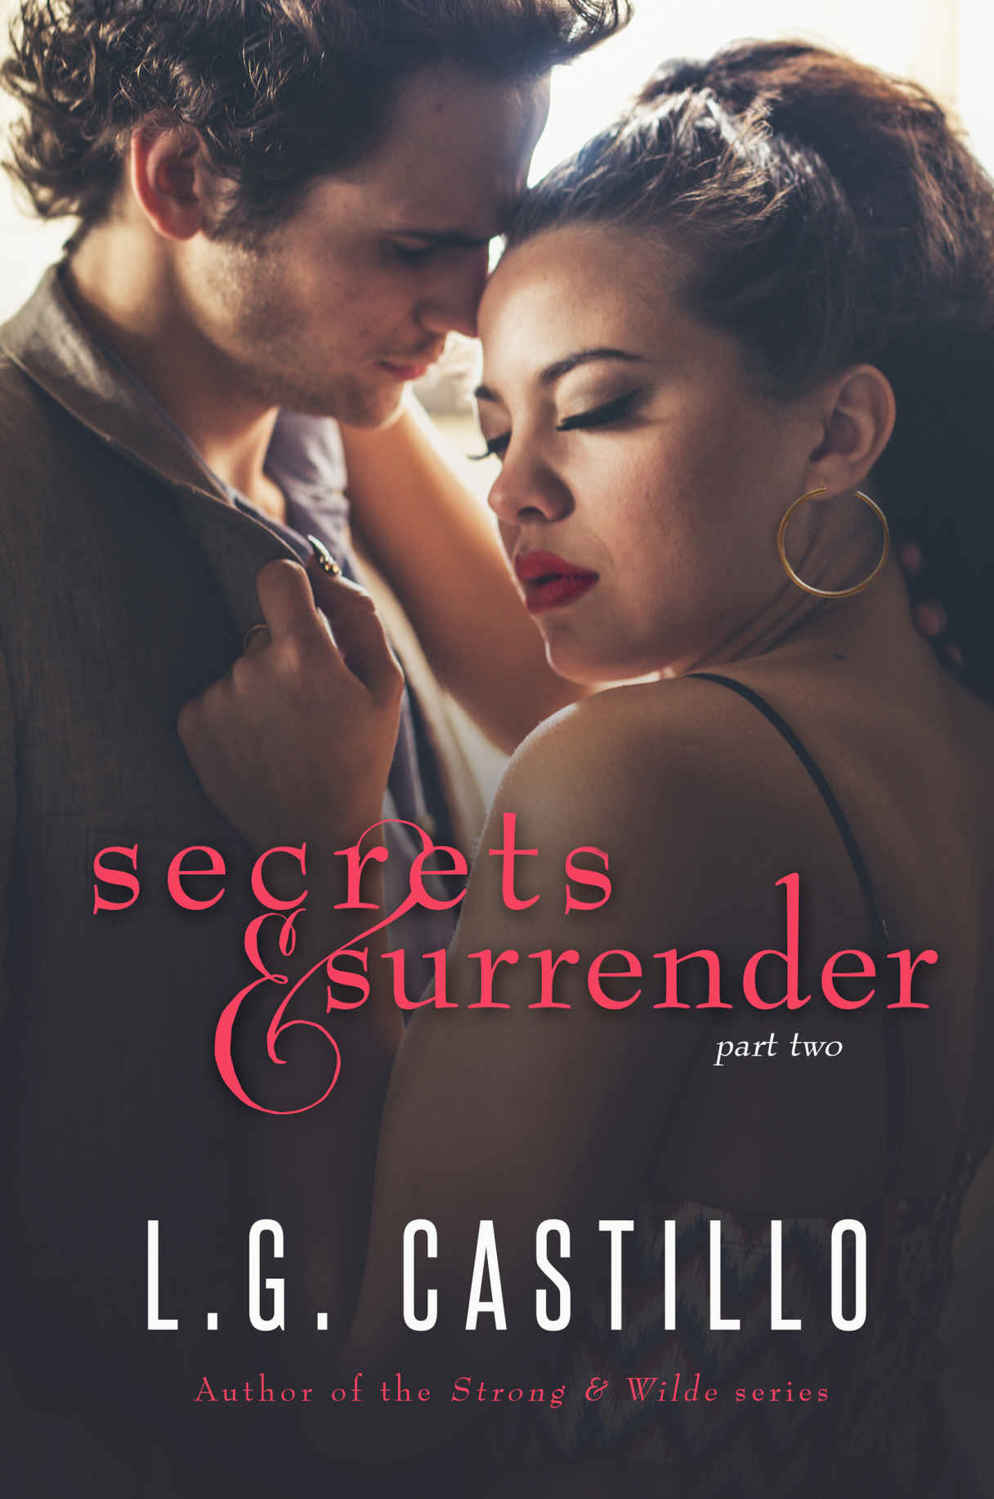 Secrets & Surrender 2 by L.G. Castillo